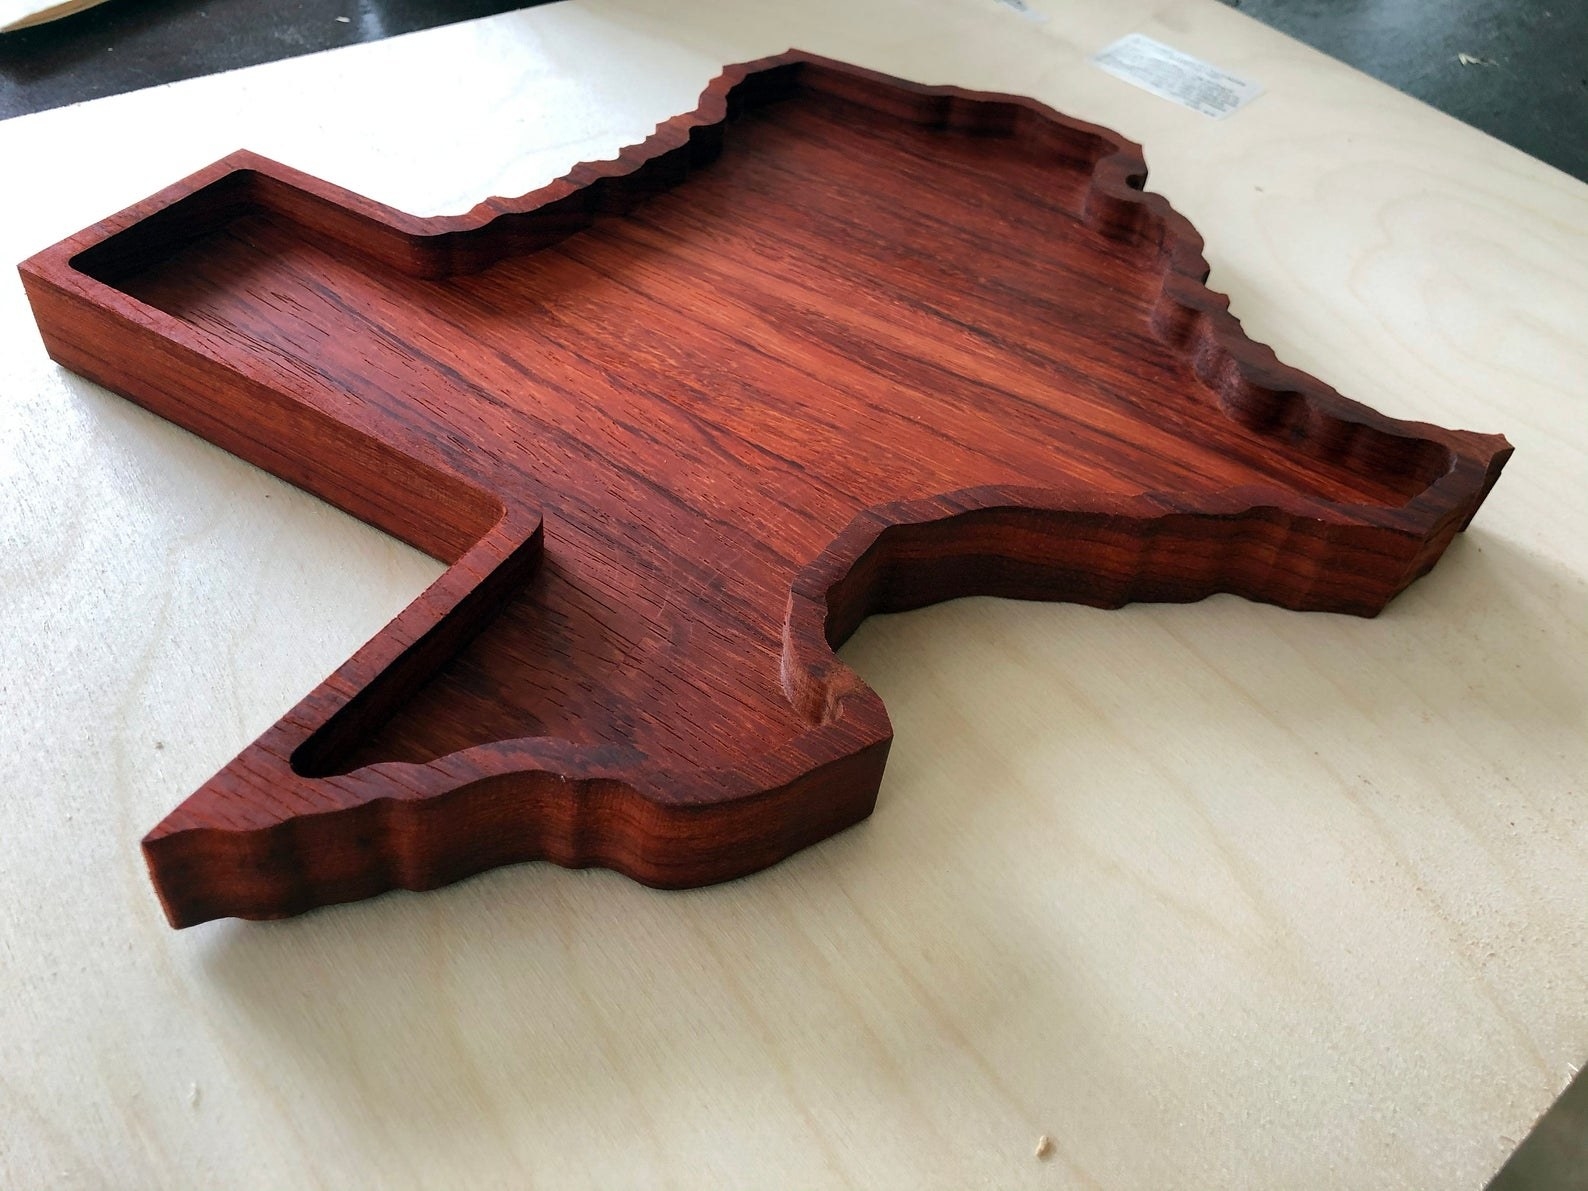 catch all wood tray shaped like Texas